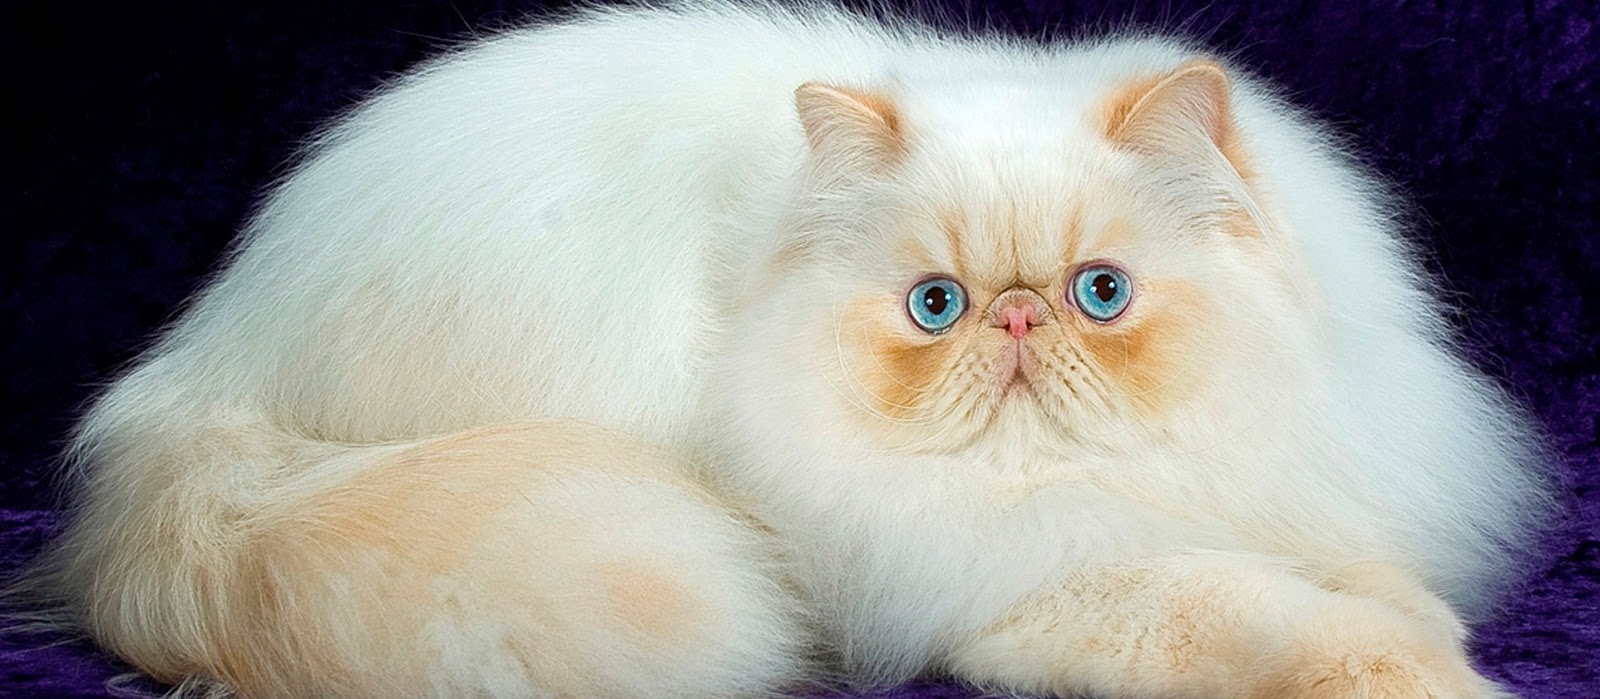 BUAT MUA MUANYA NIH KEMMACHOYS LGI MAU TEBARPESONA Gambar Kucing Lucu